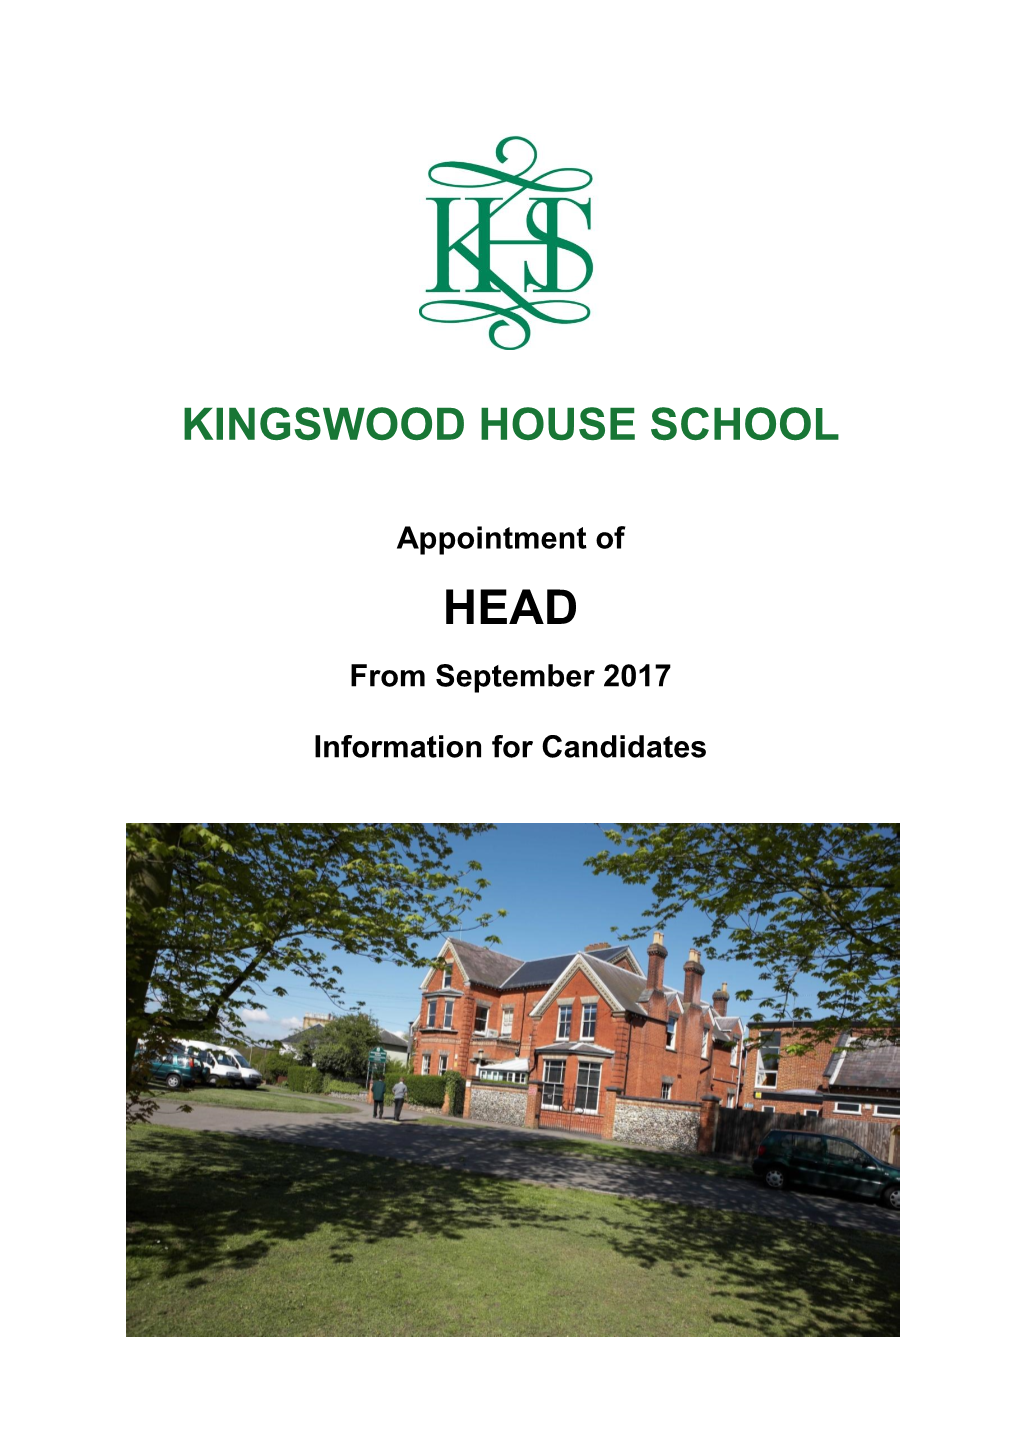 Kingswood House School